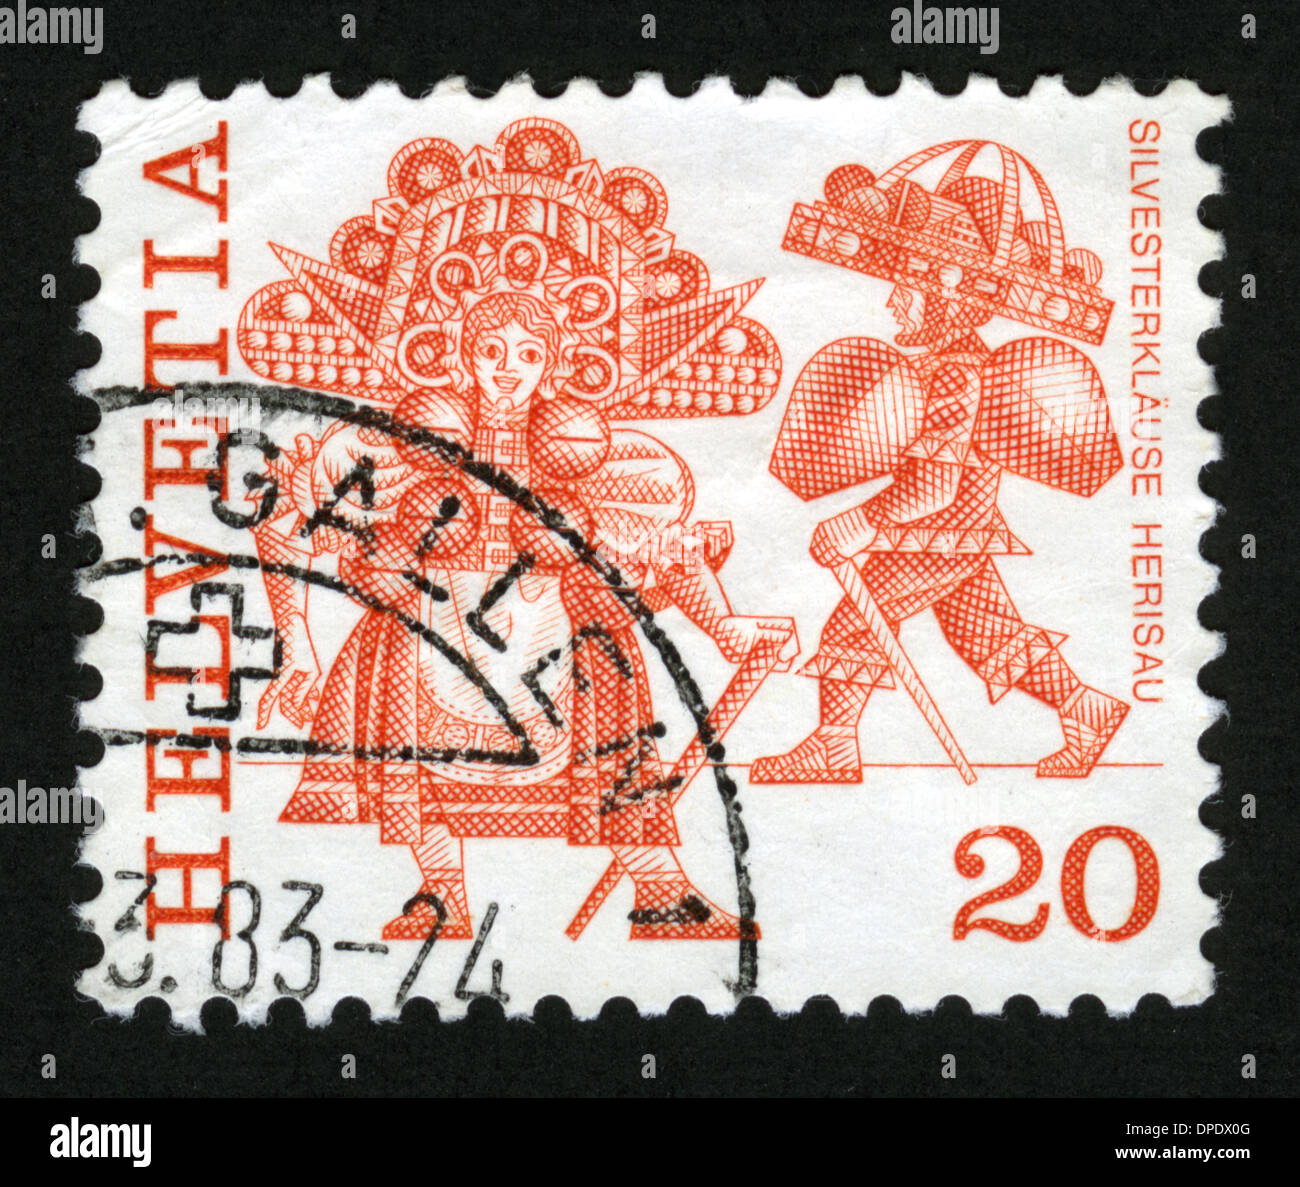 Schweiz, Helvetia, Briefmarke, post markieren, Stempel, Poststempel, Stockfoto